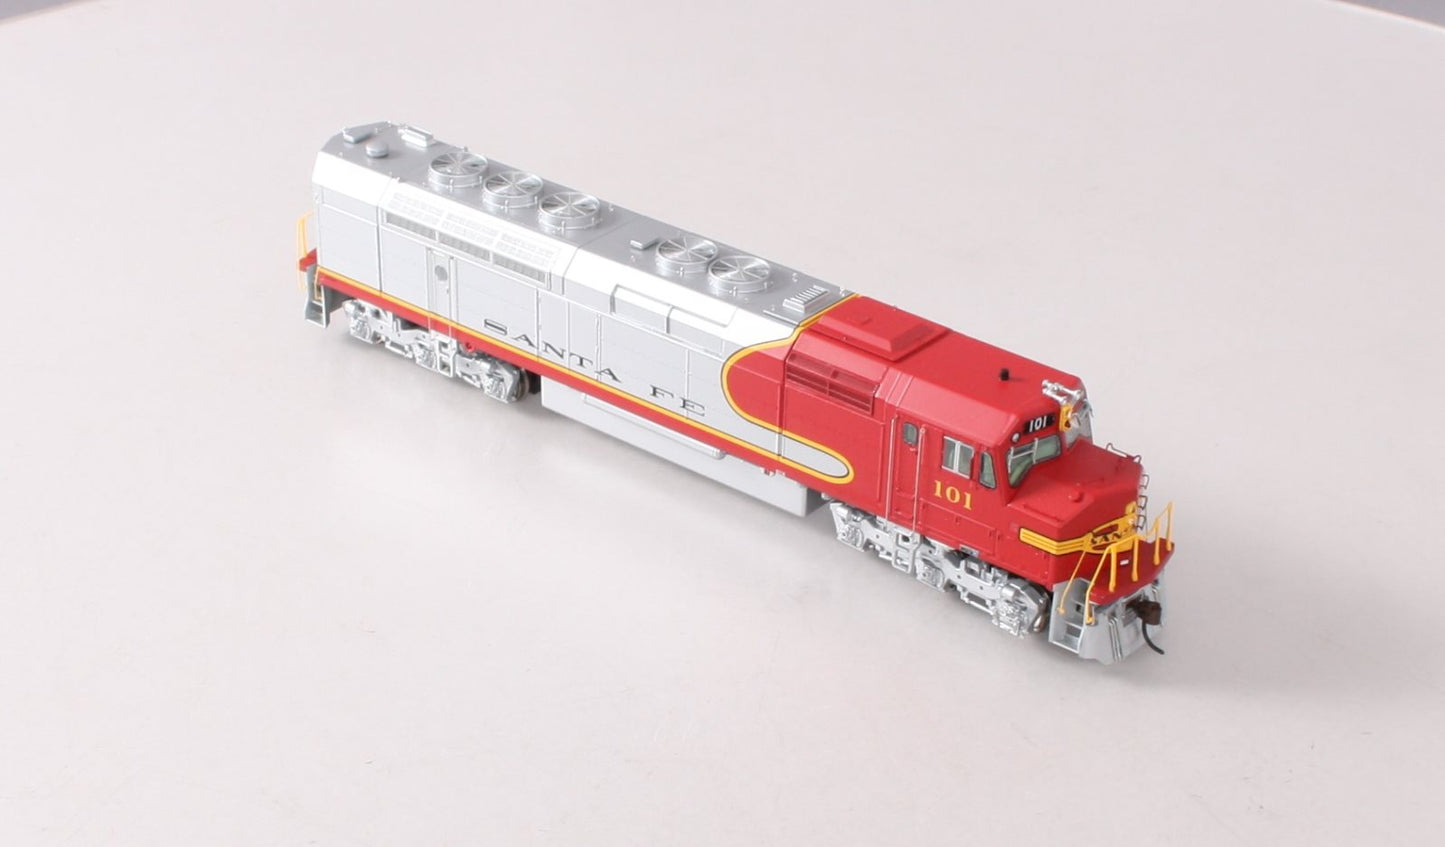 Athearn G67661 HO Santa Fe/Superchief FP45 Diesel Locomotive w/DCC & Sound #101